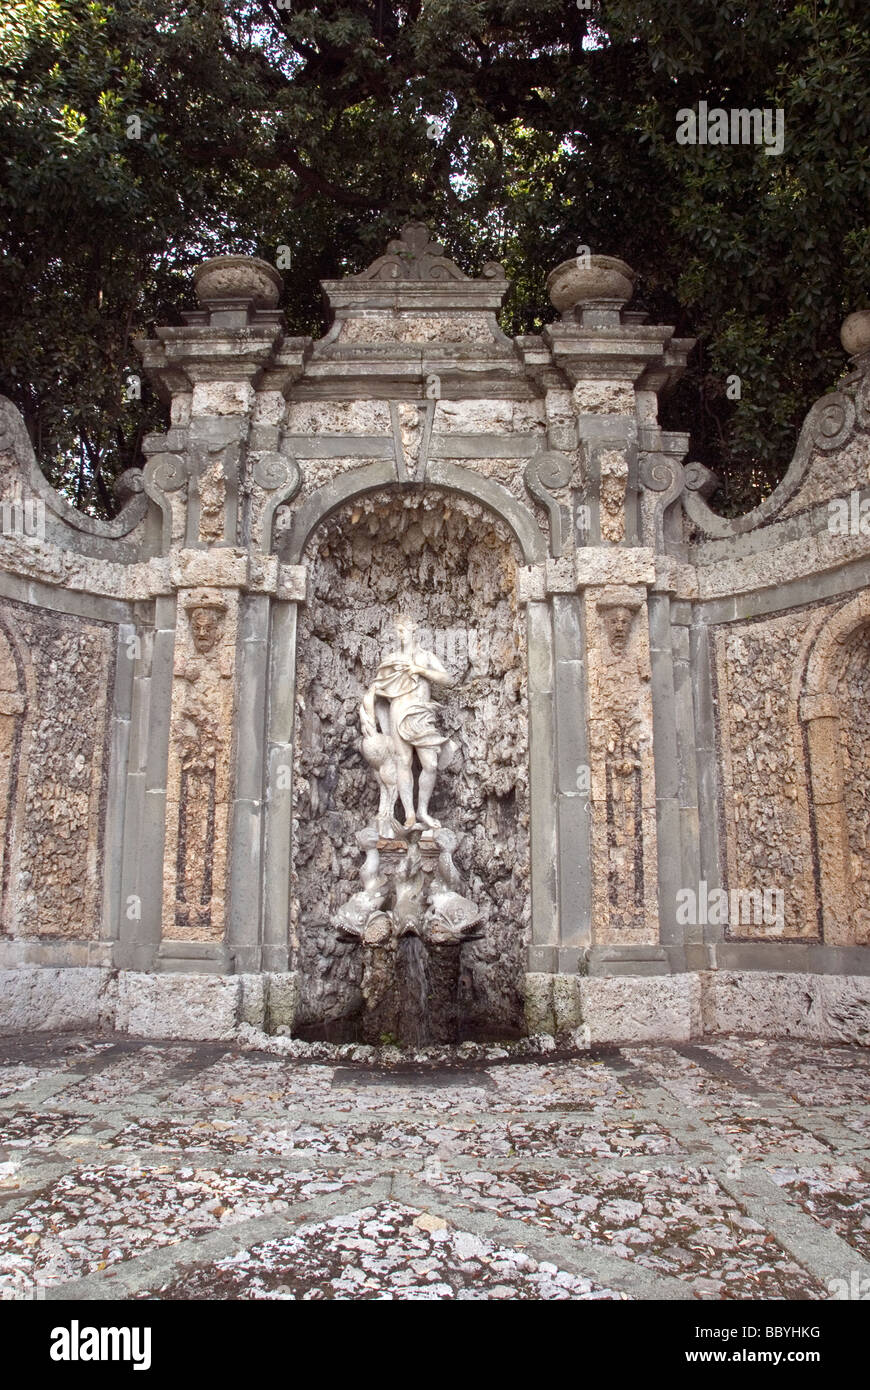 Statuary in the piscina Parco Villa Reale Stock Photo